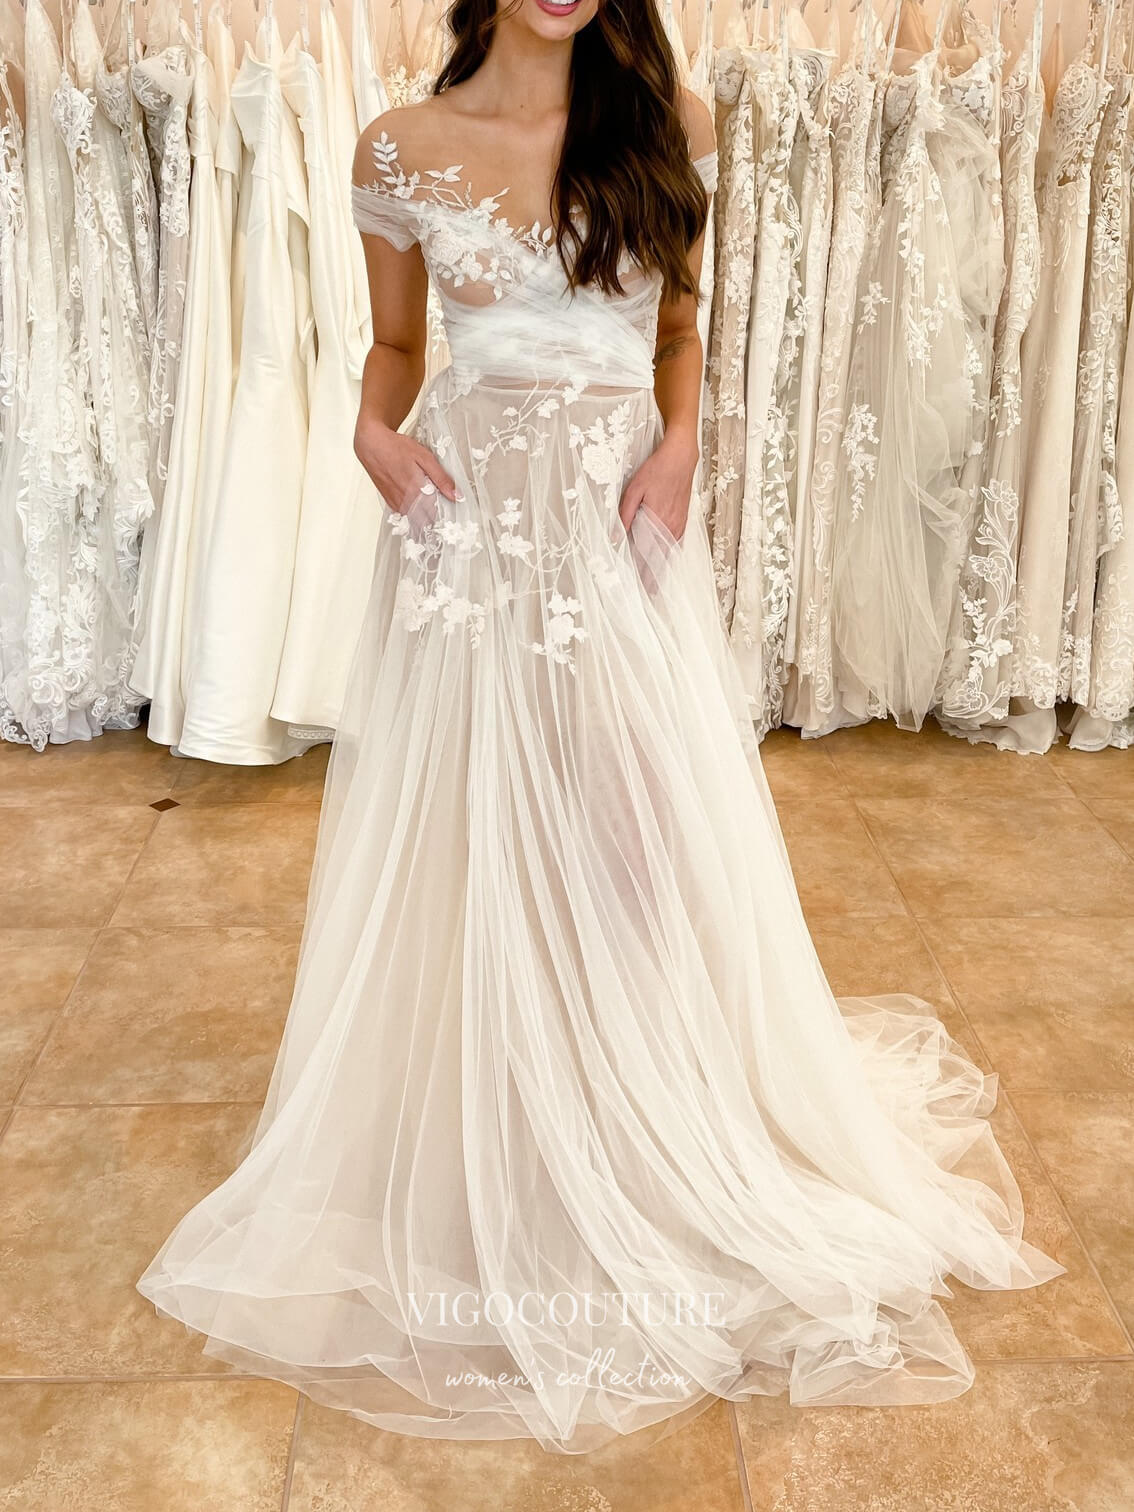 vigocouture-Lace Applique Wedding Dresses A-Line Tulle Country Bridal Dresses W0020-Wedding Dresses-vigocouture-As Pictured-US2-